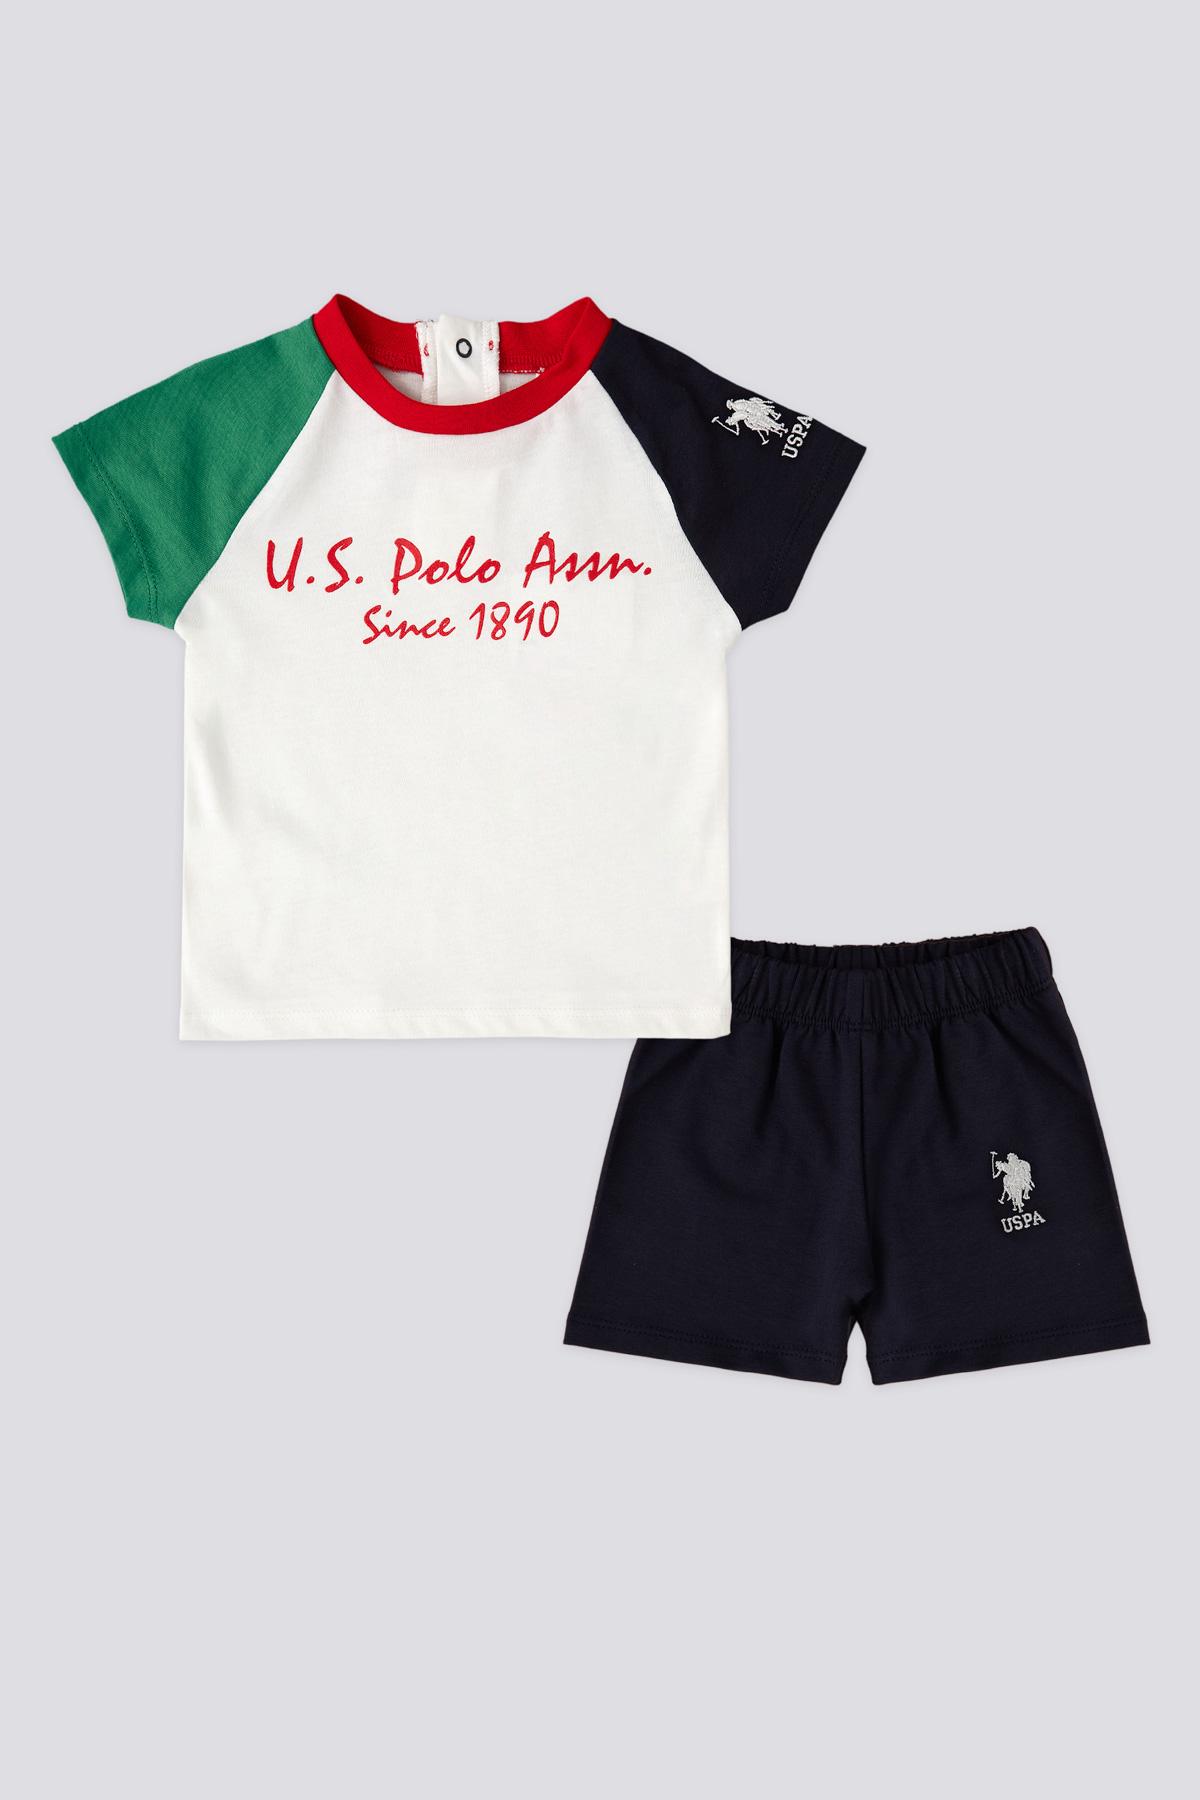 Selected image for U.S. Polo Assn. Komplet za bebe USB1823, Crno-beli